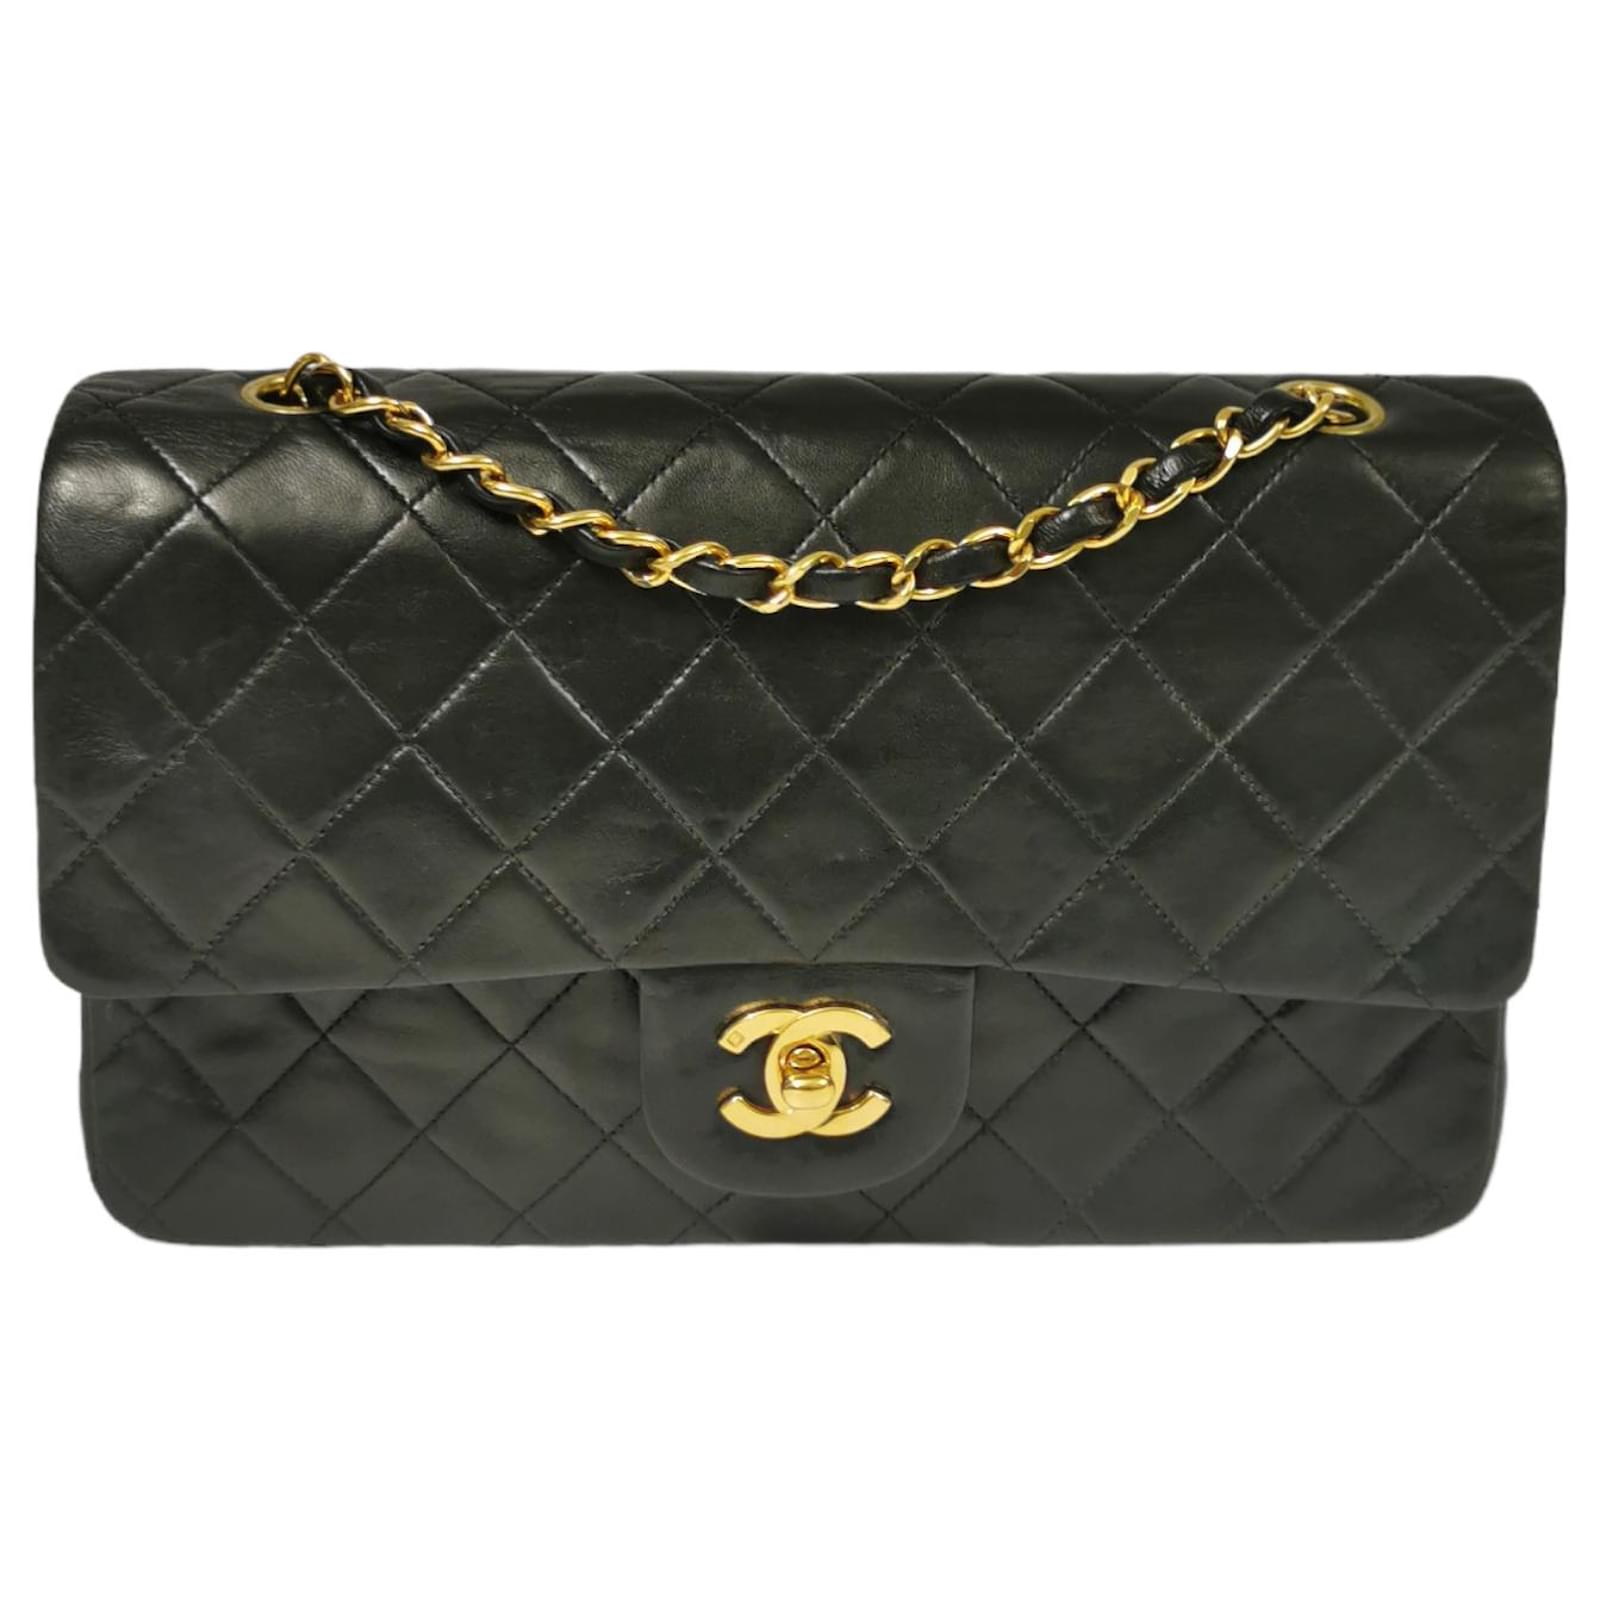 Handbags Chanel Chanel Classic Double Flap Medium Black Lambskin Gold Size Unique Inter